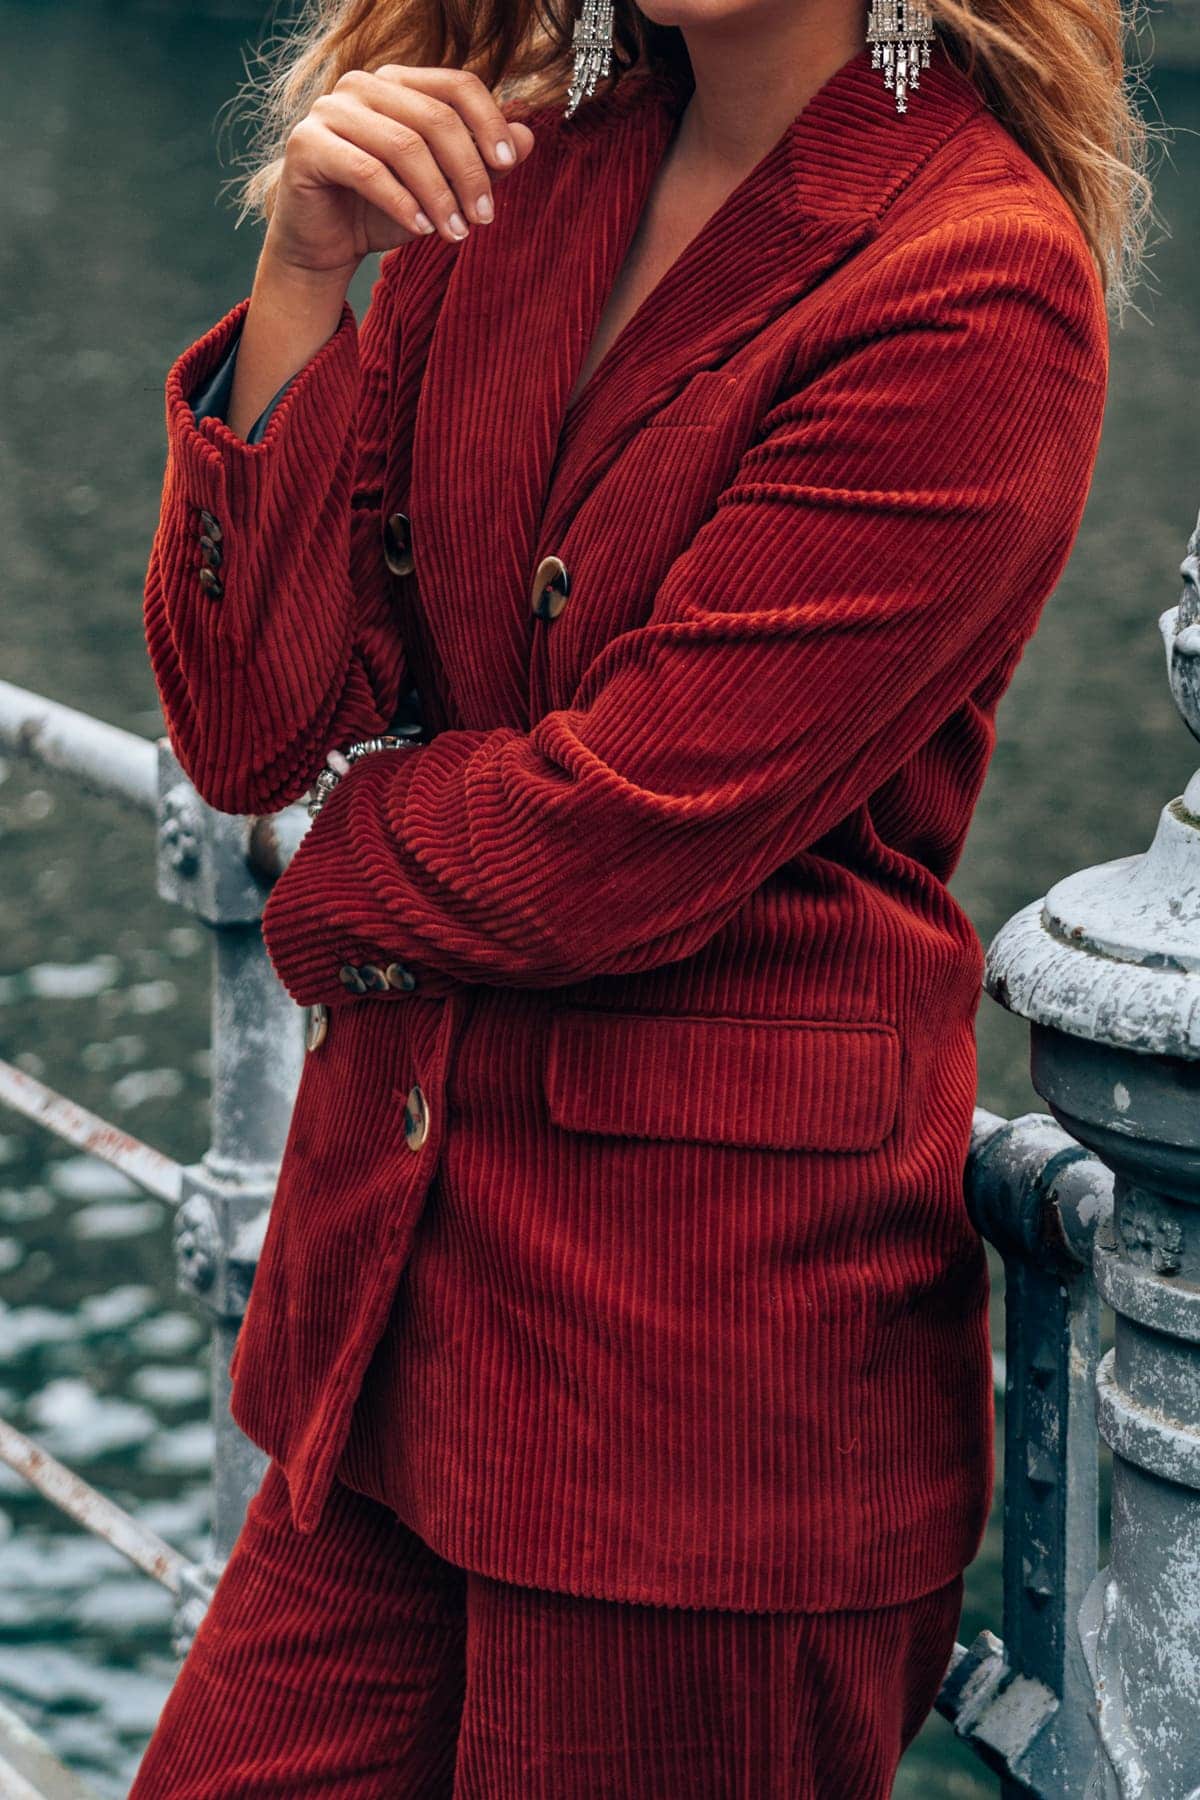 Mein Silvester Outfit 2018 - Roter Kord Anzug von Zara